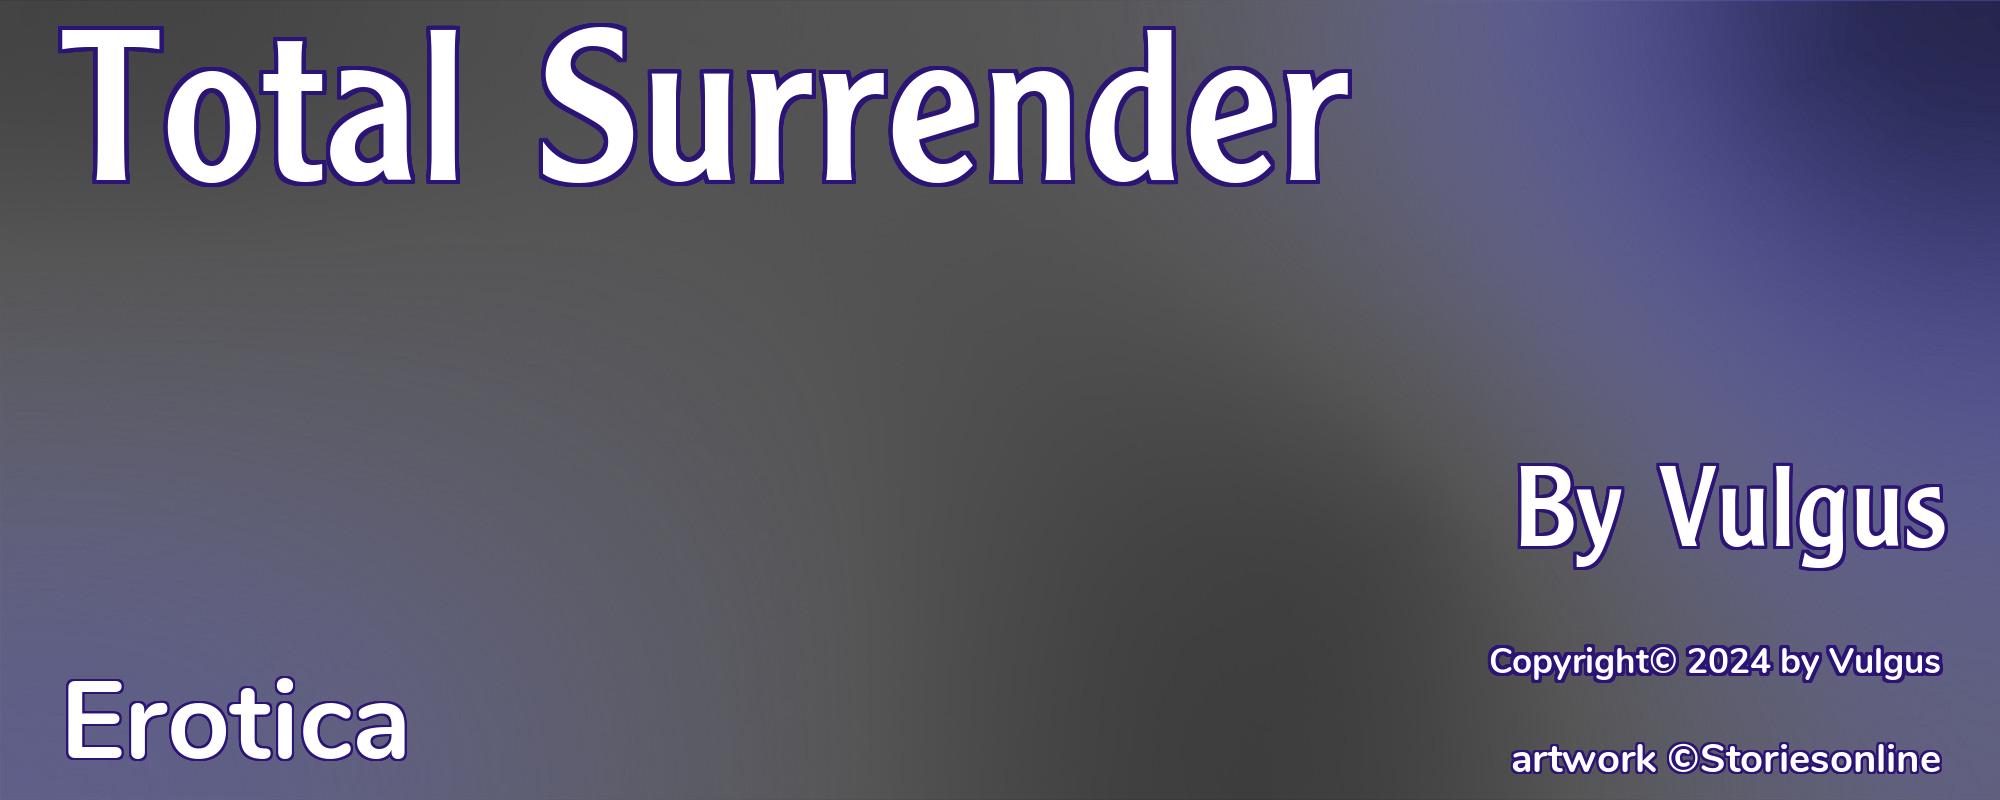 Total Surrender - Cover